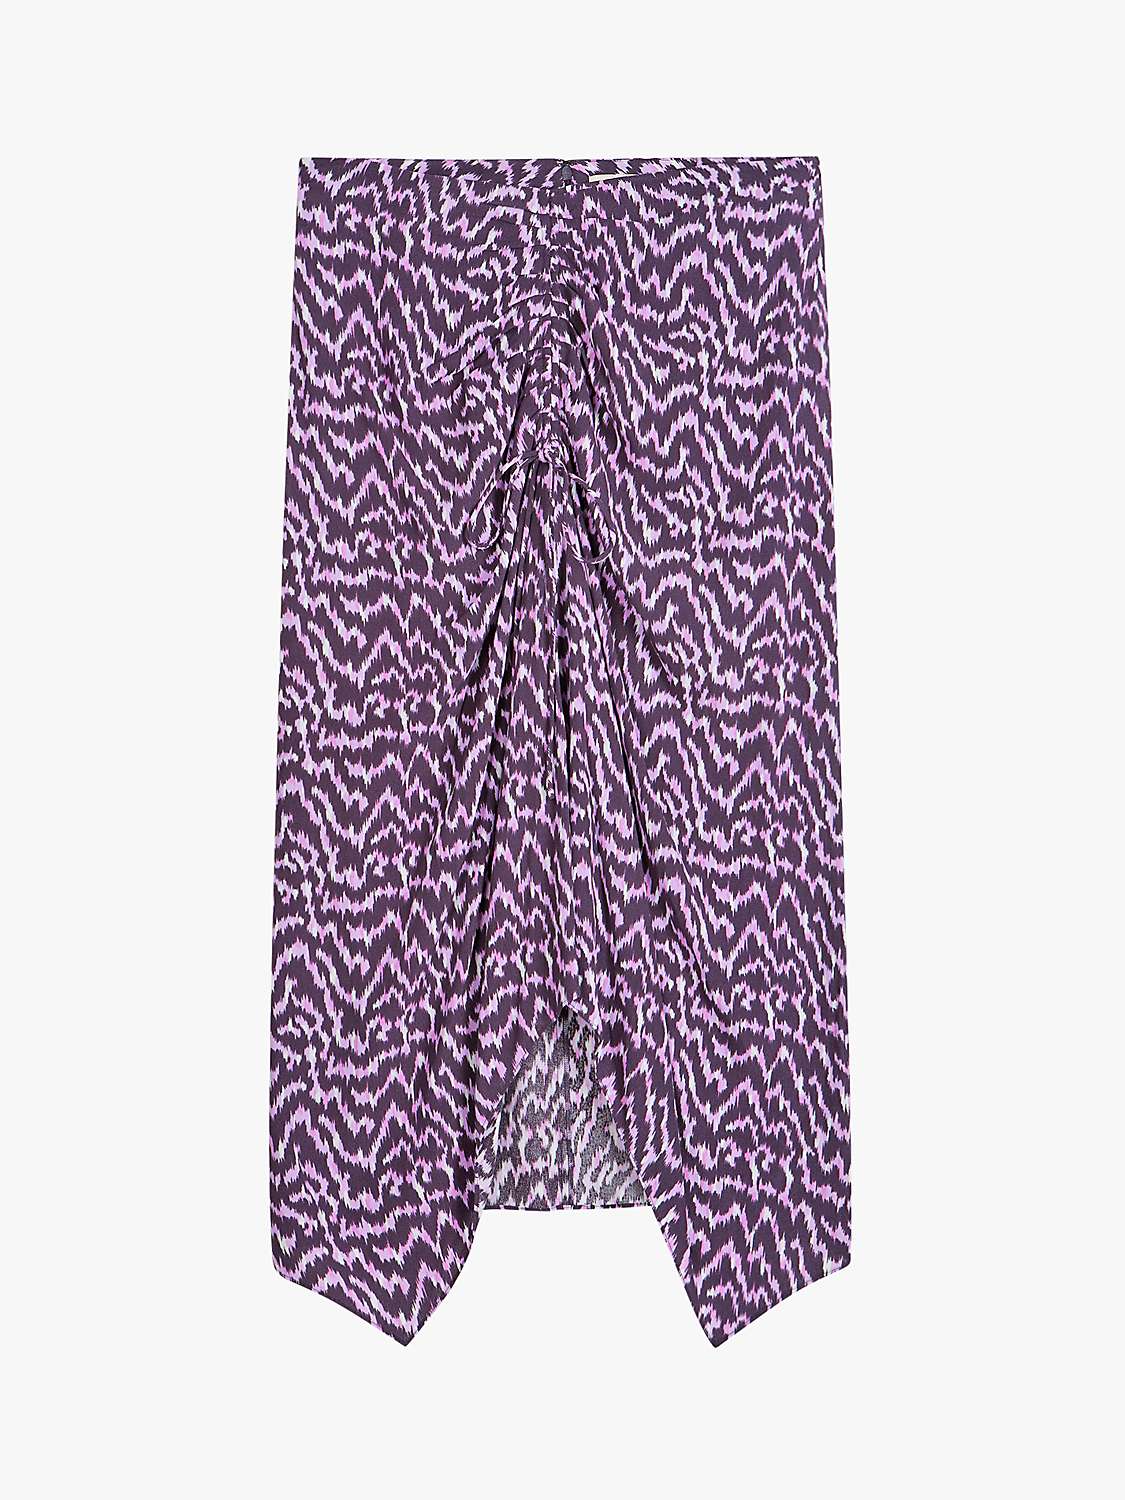 Buy HUSH Fran Ruched Digital Ikat Print Midi Skirt, Lilac Online at johnlewis.com